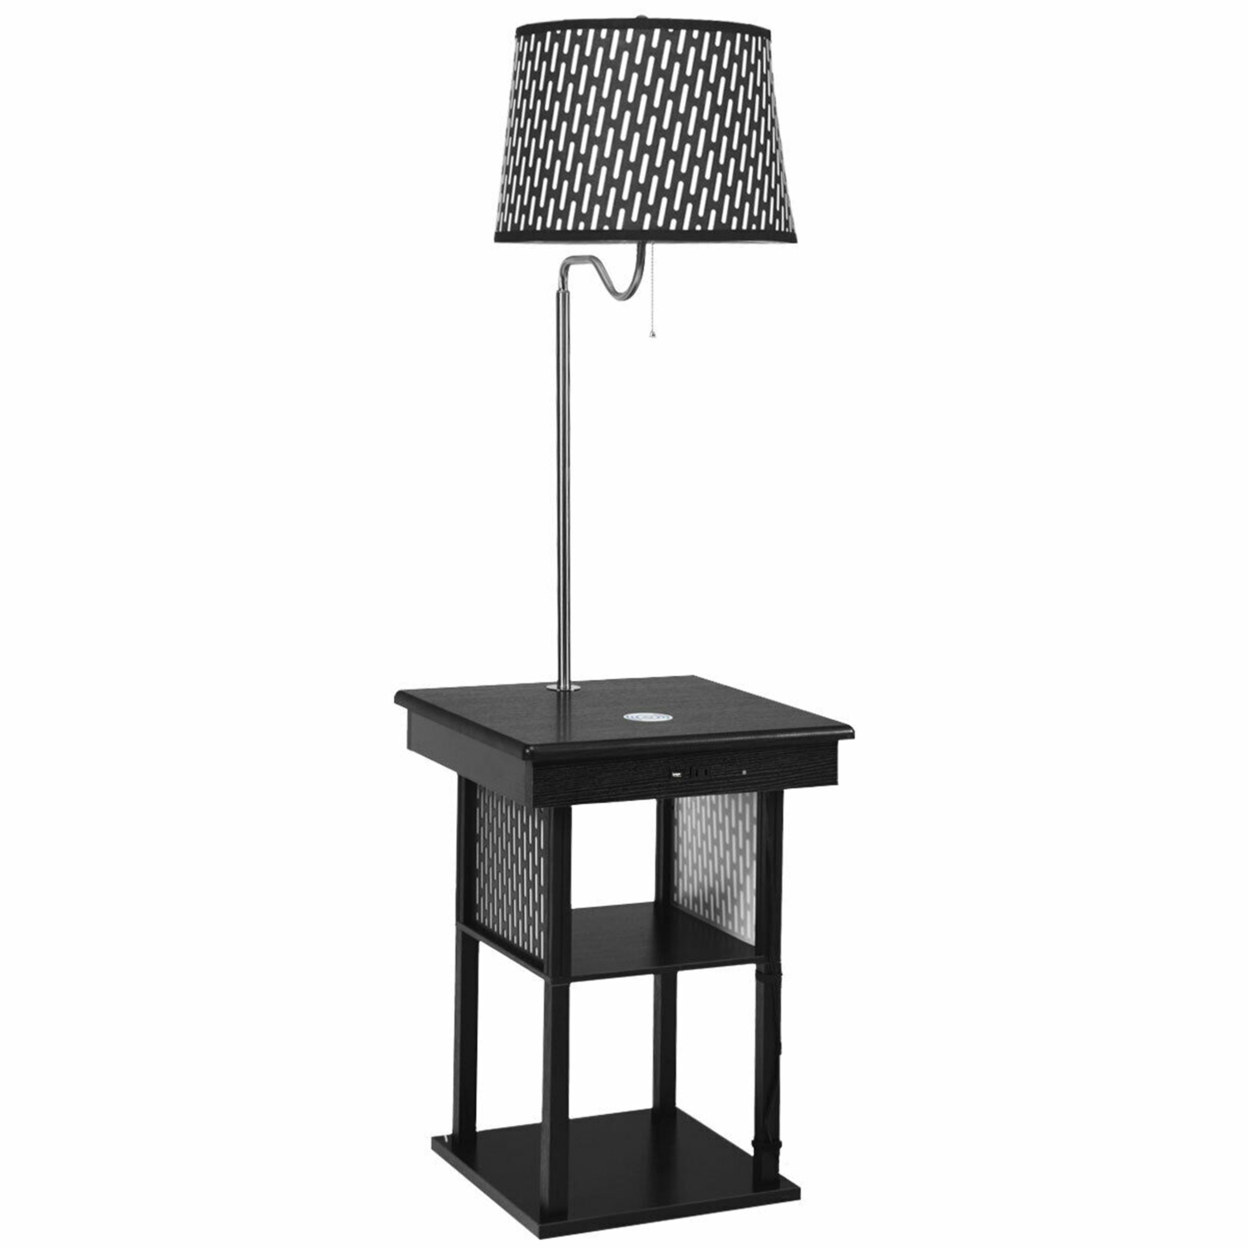 Floor Lamp End Table Modern Nightstand Bedside Desk W/ USB Charging Ports Shelves